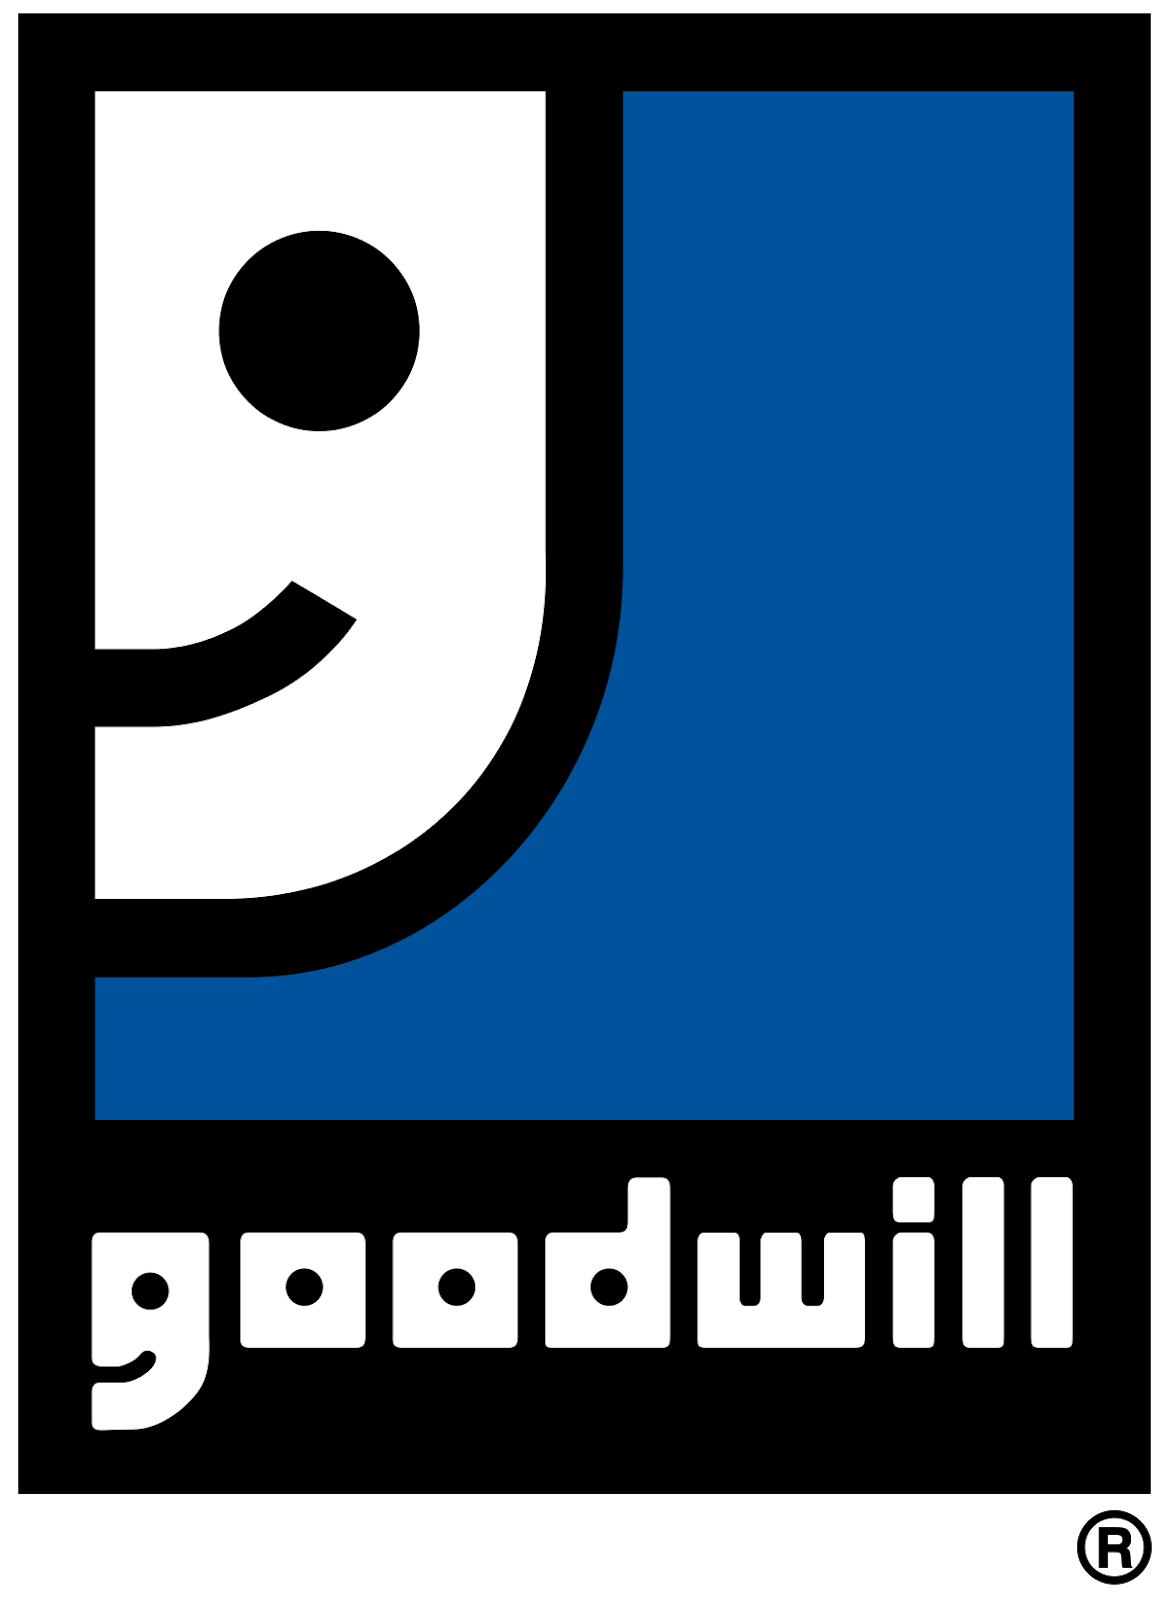 goodwill logo.png